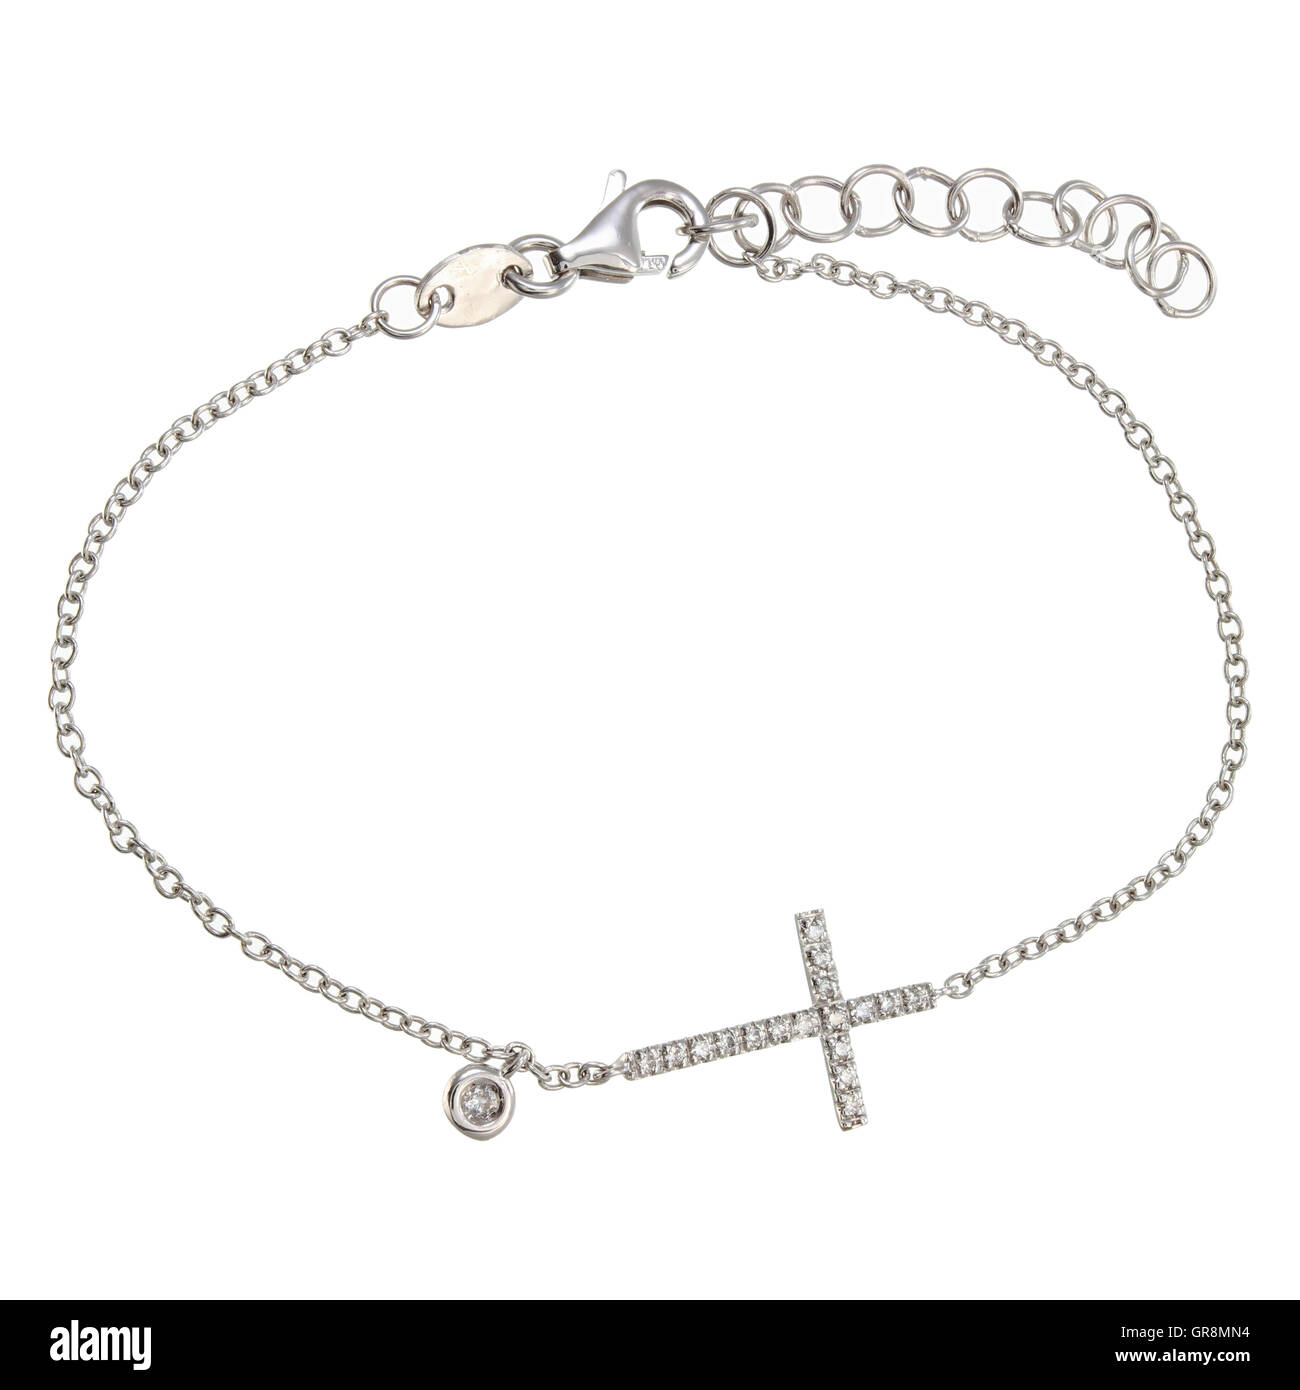 A diamond bracelet with on white background Stock Photo - Alamy